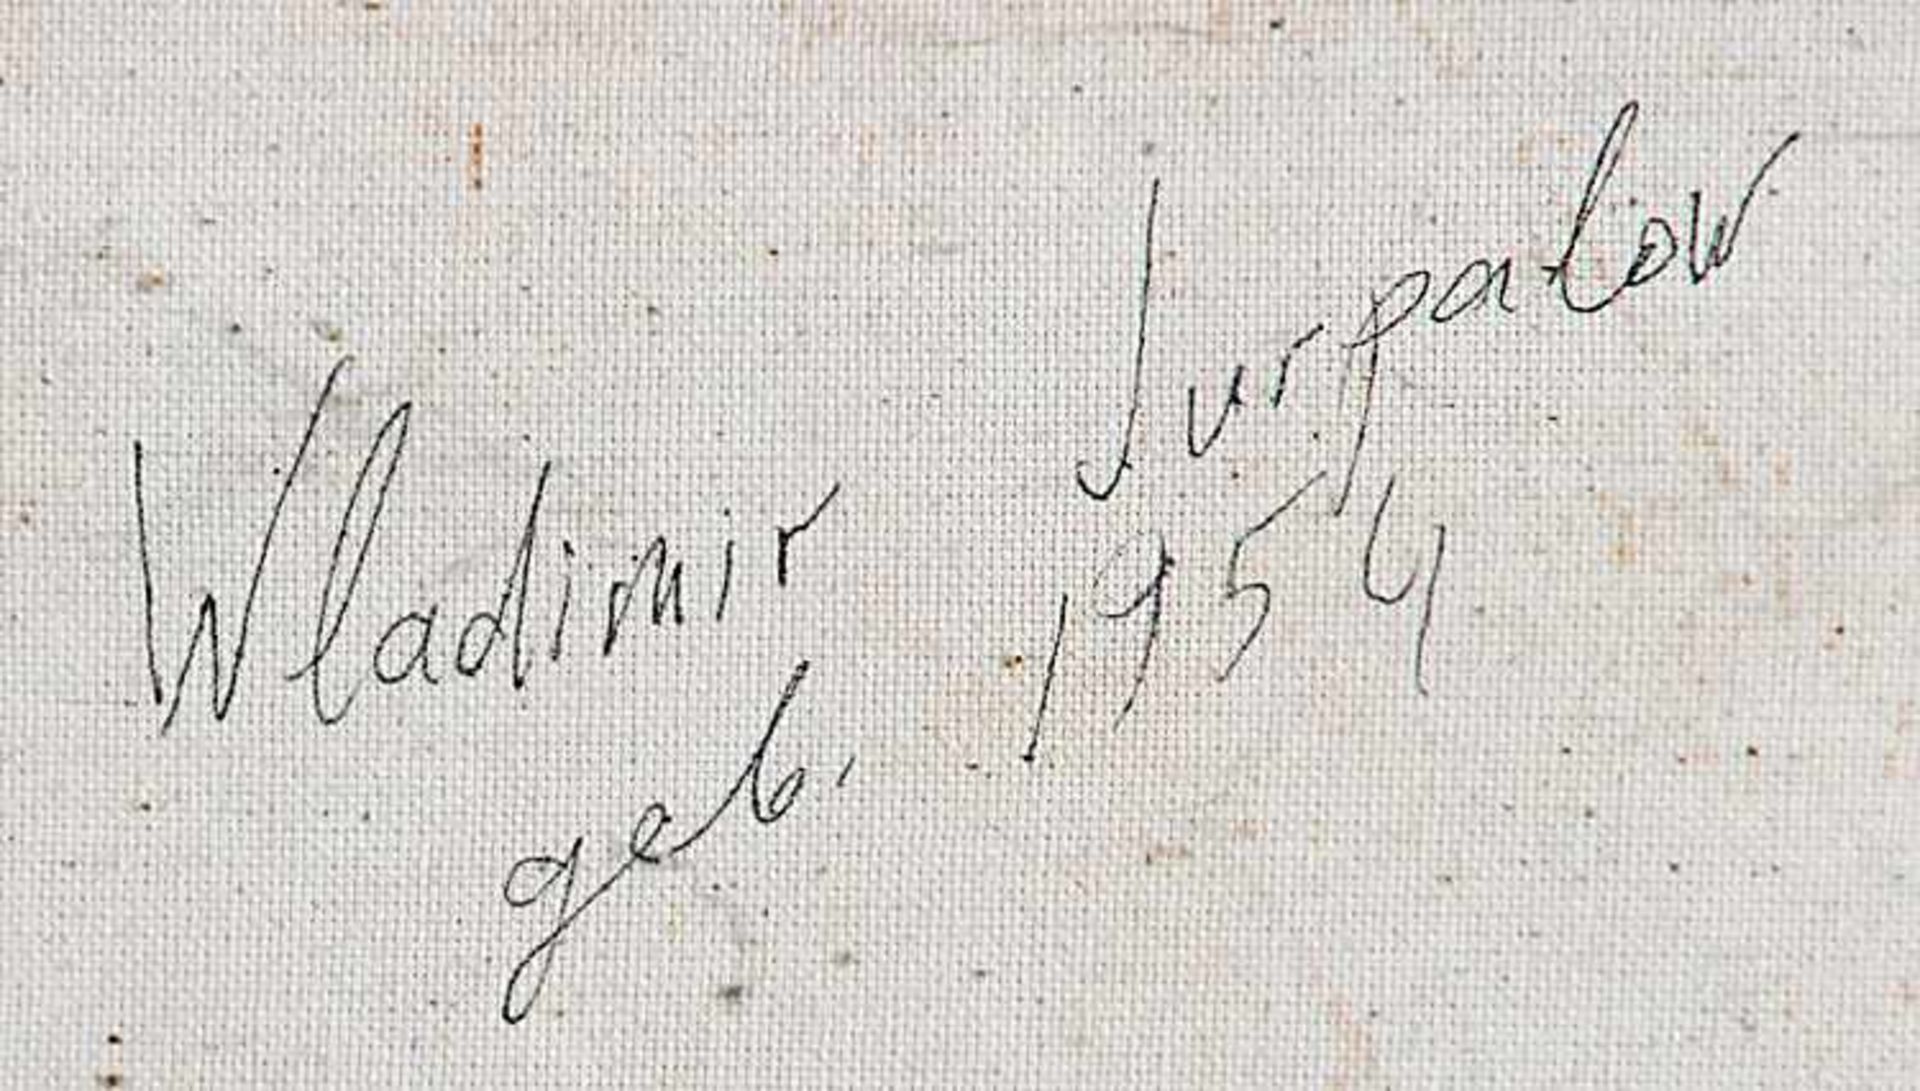 Jurpalov, VladimirOhne Titel.Verso bez. Vladimir Jurpalov. Öl/Lwd., 55 x 55 cm. R..€ 50 - Bild 2 aus 2